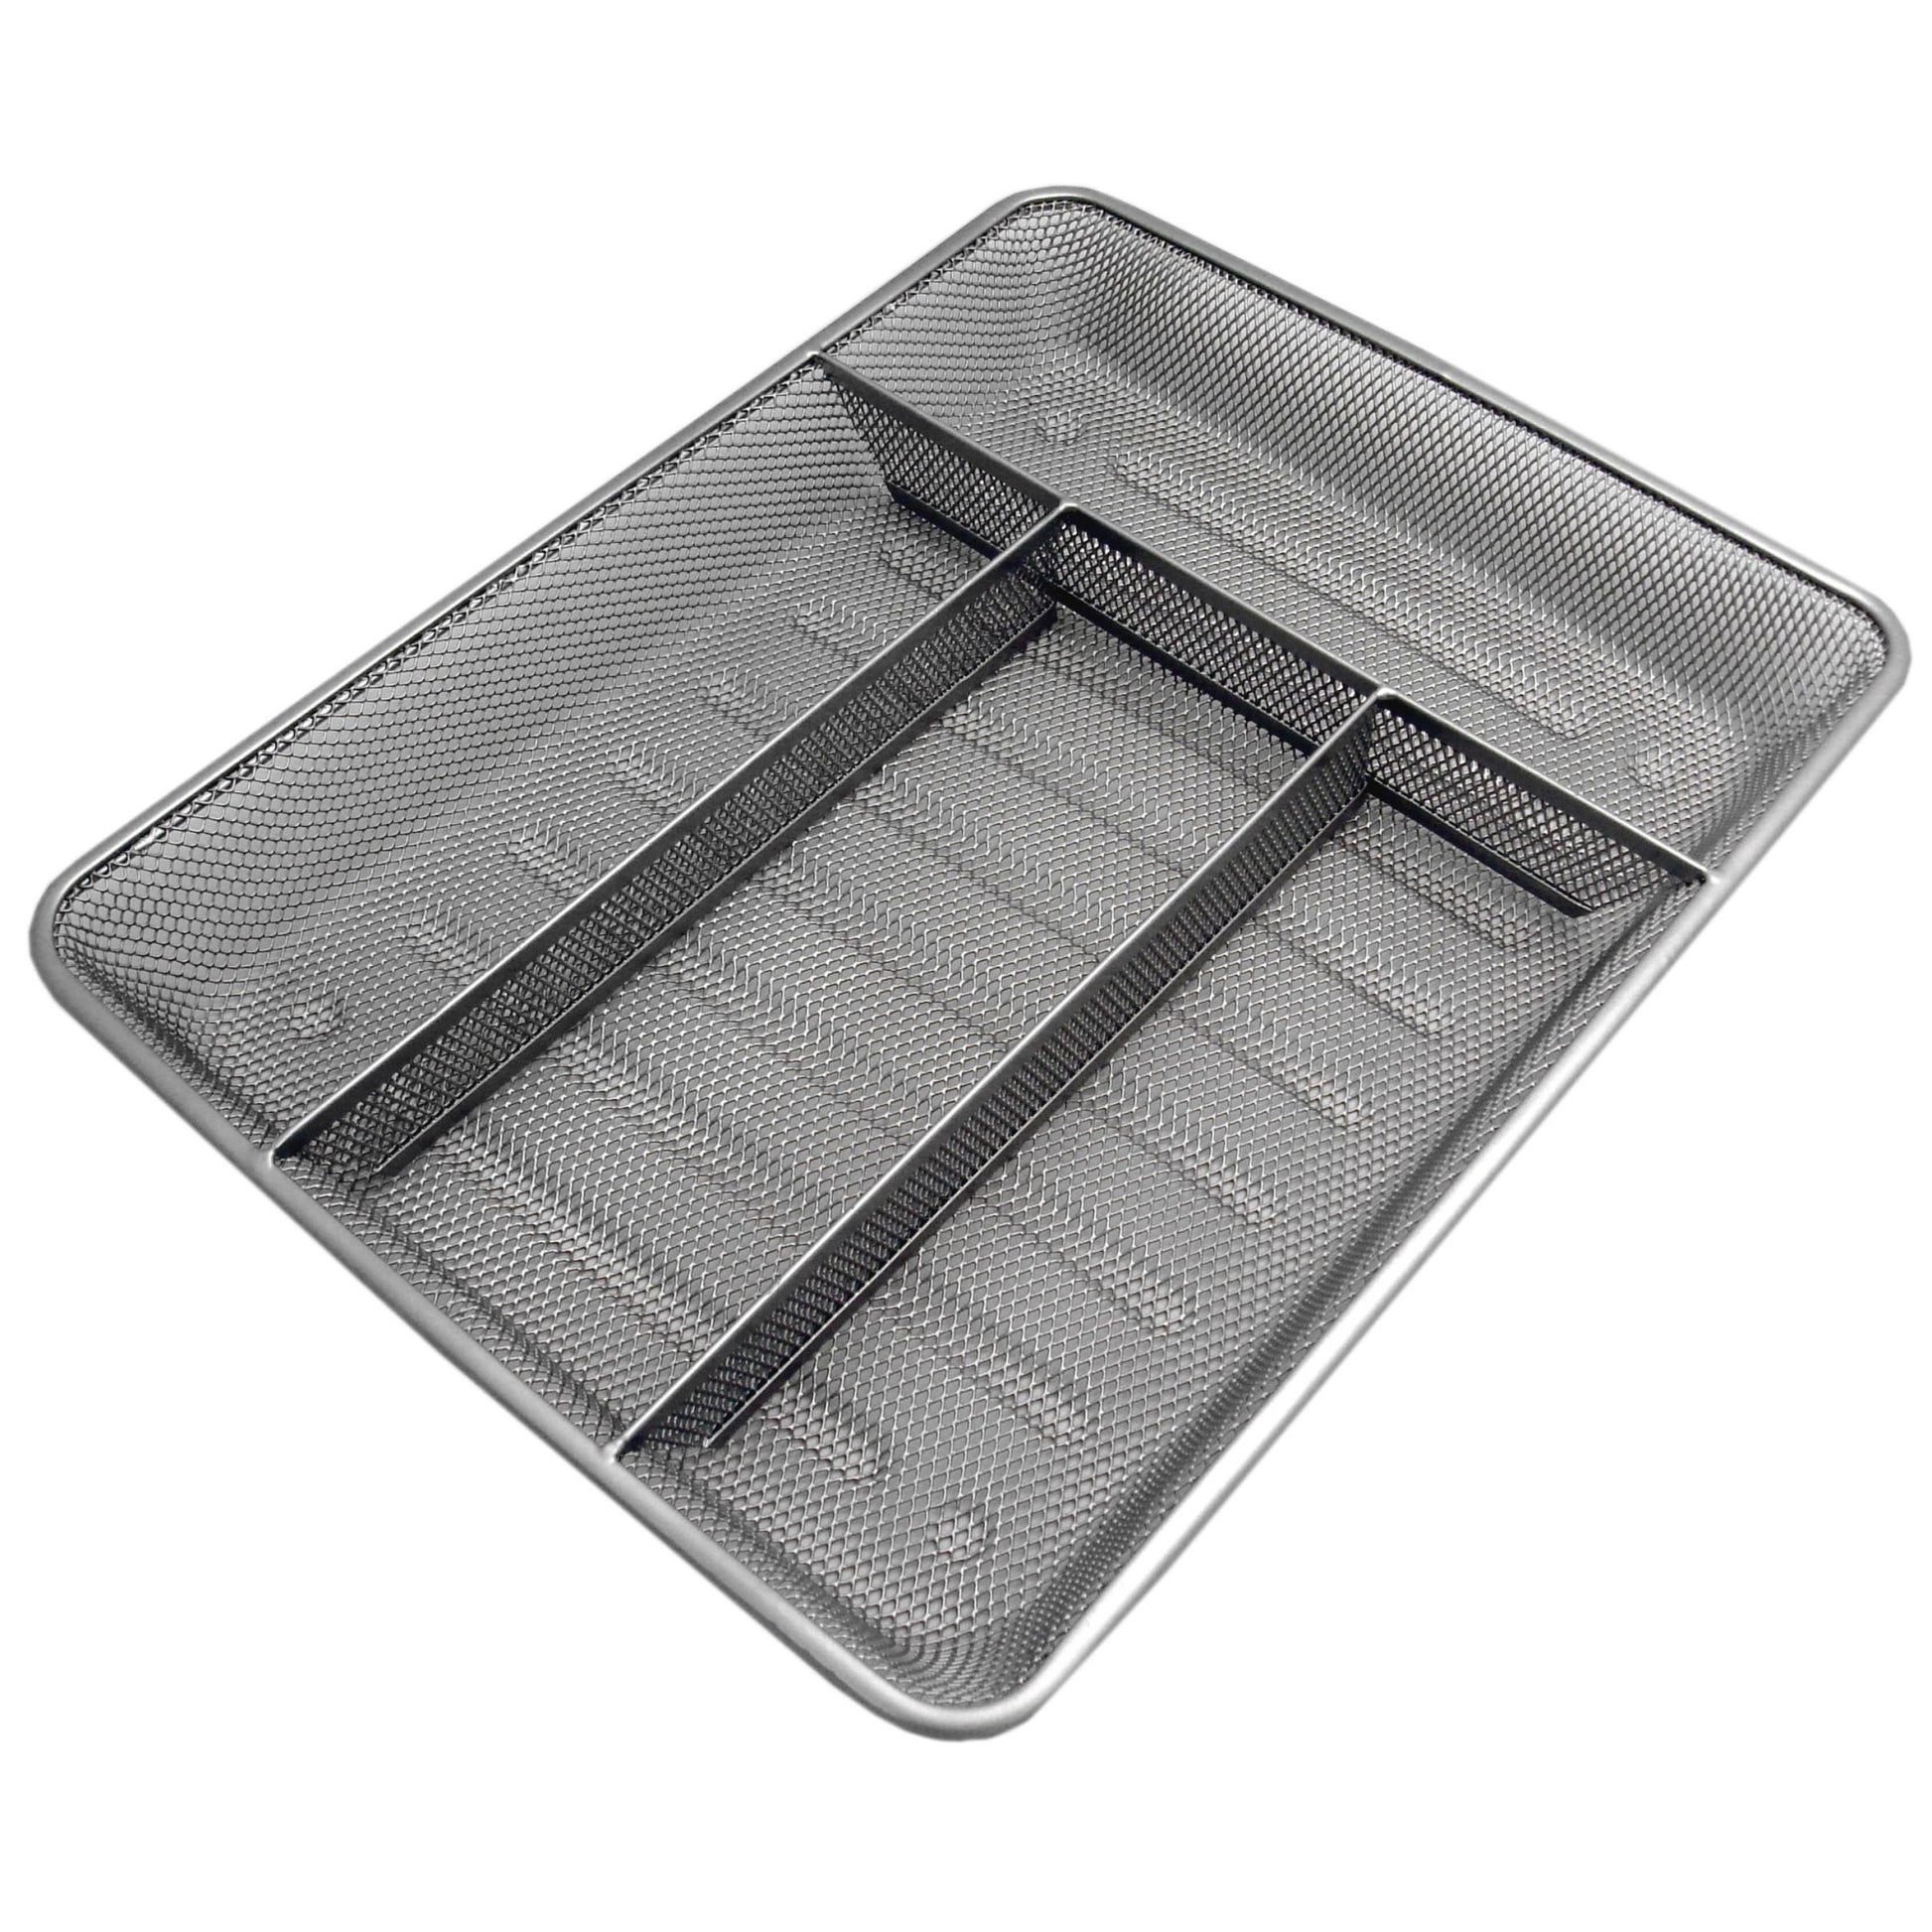 Home Basics Mesh Steel Cutlery Tray - Silver